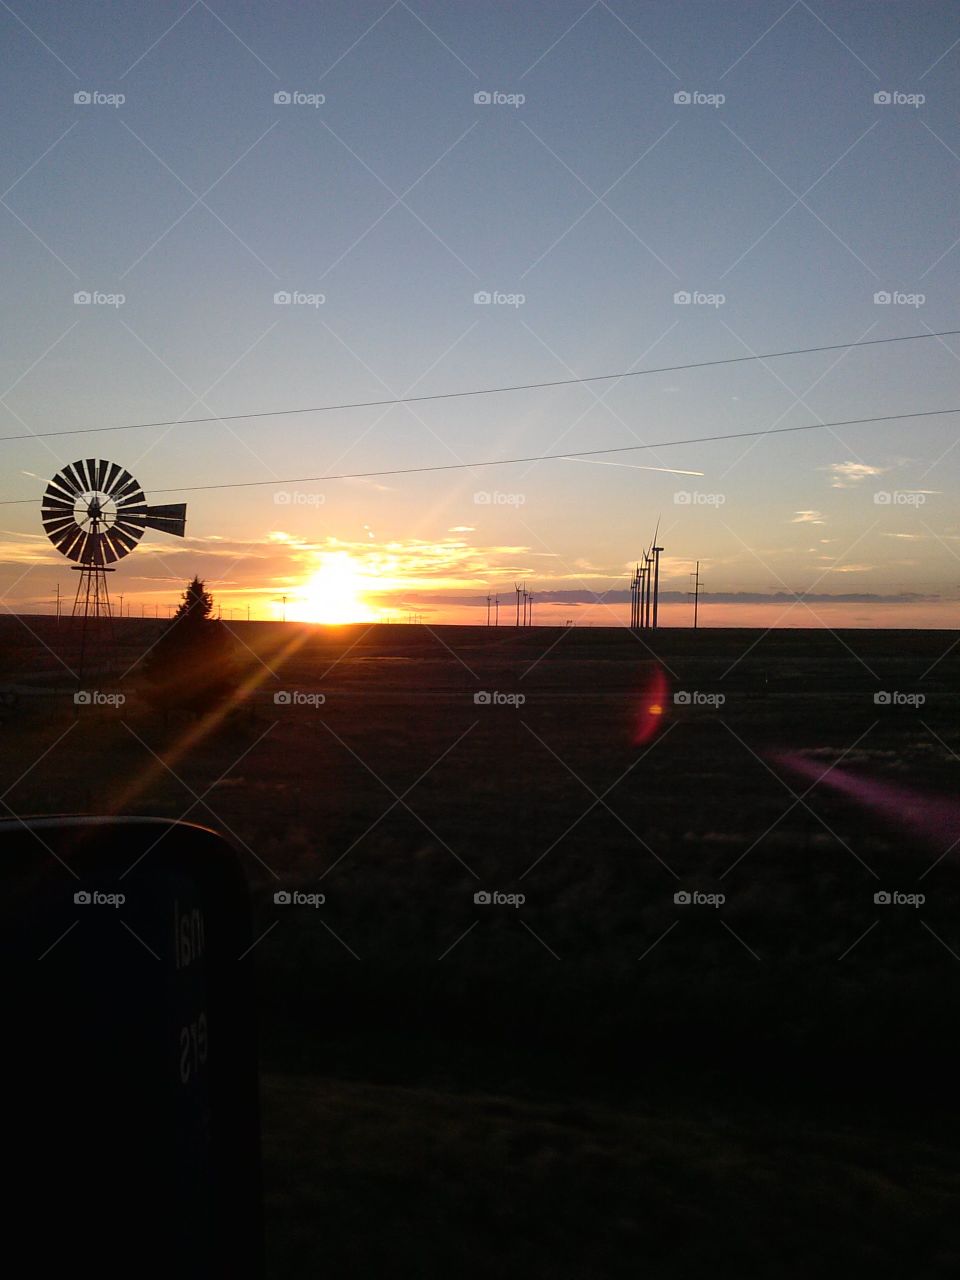 windmill and sunset